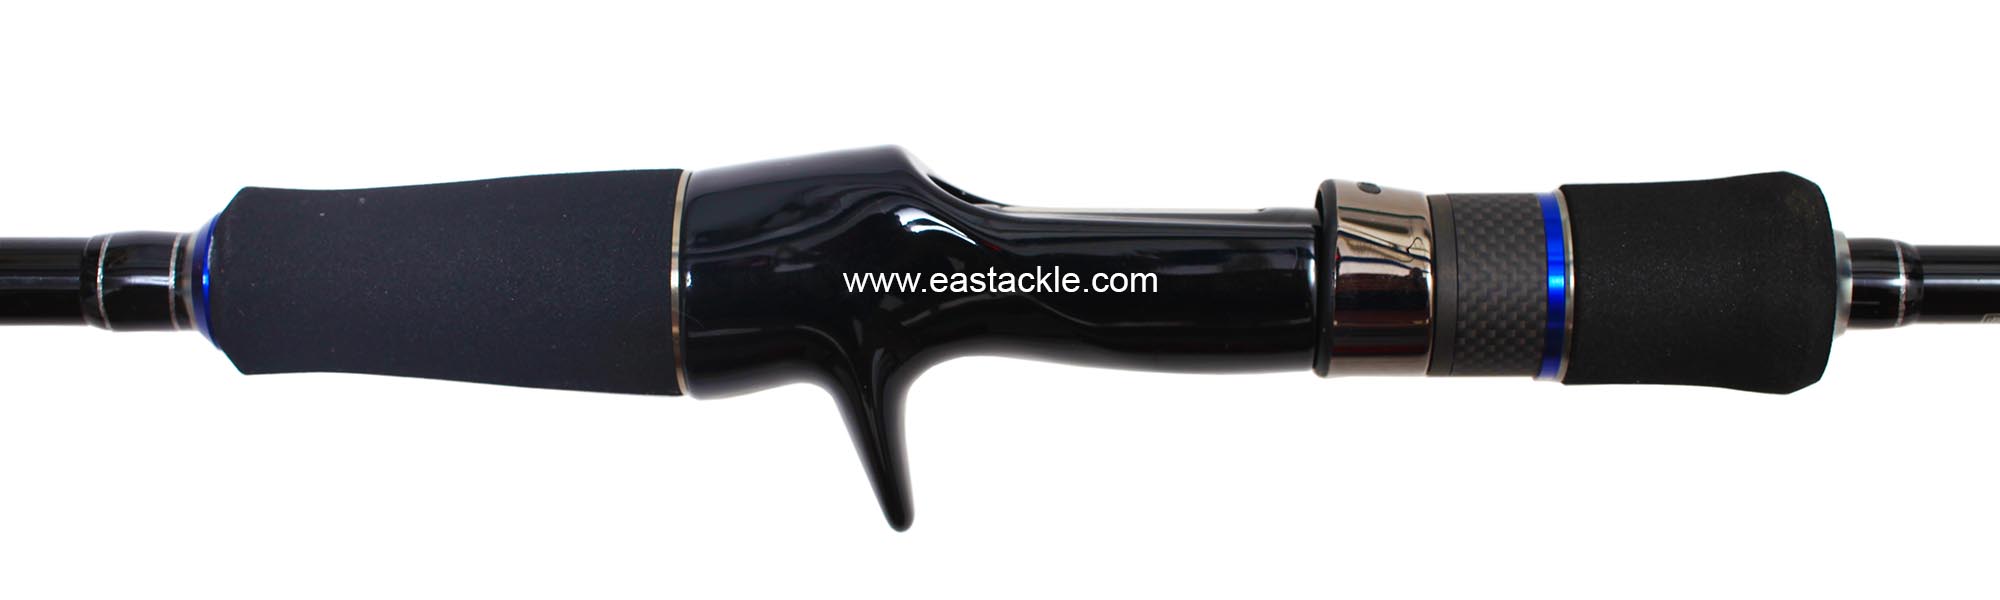 Storm - Gomoku Black Kaiten GBC601-2.5 - Elite Jigging Game - Bait Casting Jigging Rod - Reel Seat Section (Side View) | Eastackle